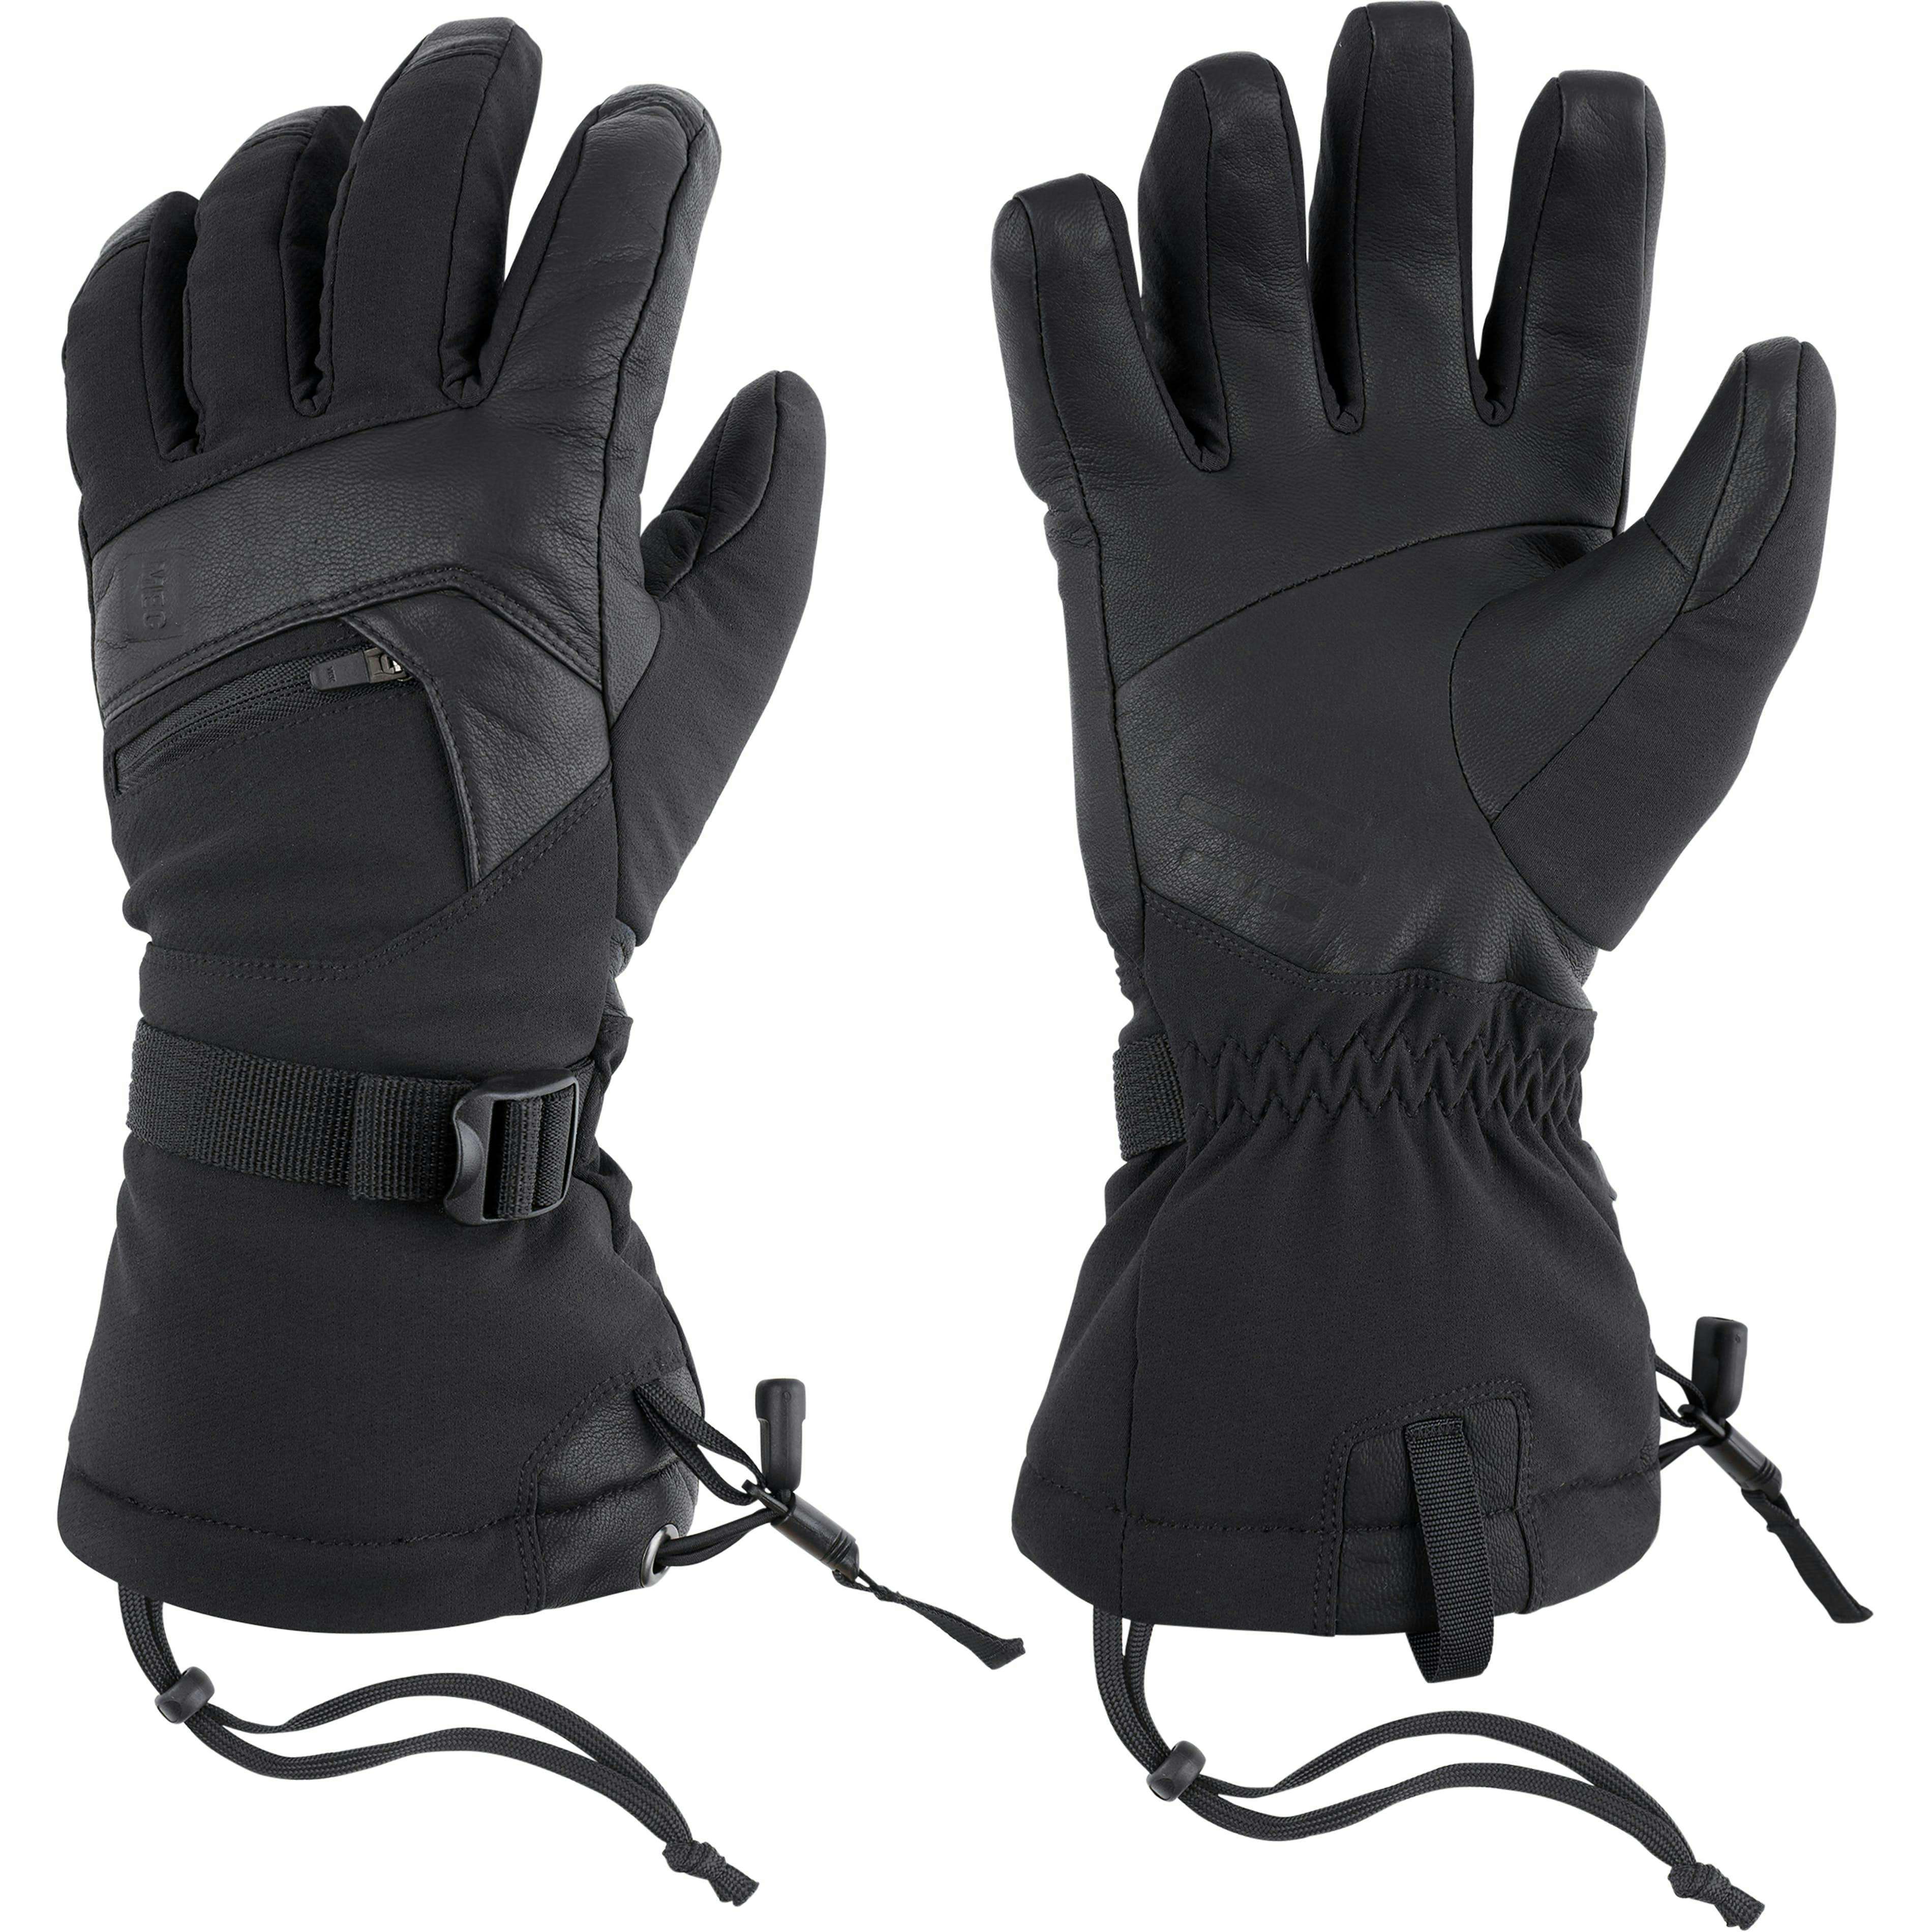 MEC Icefields gloves